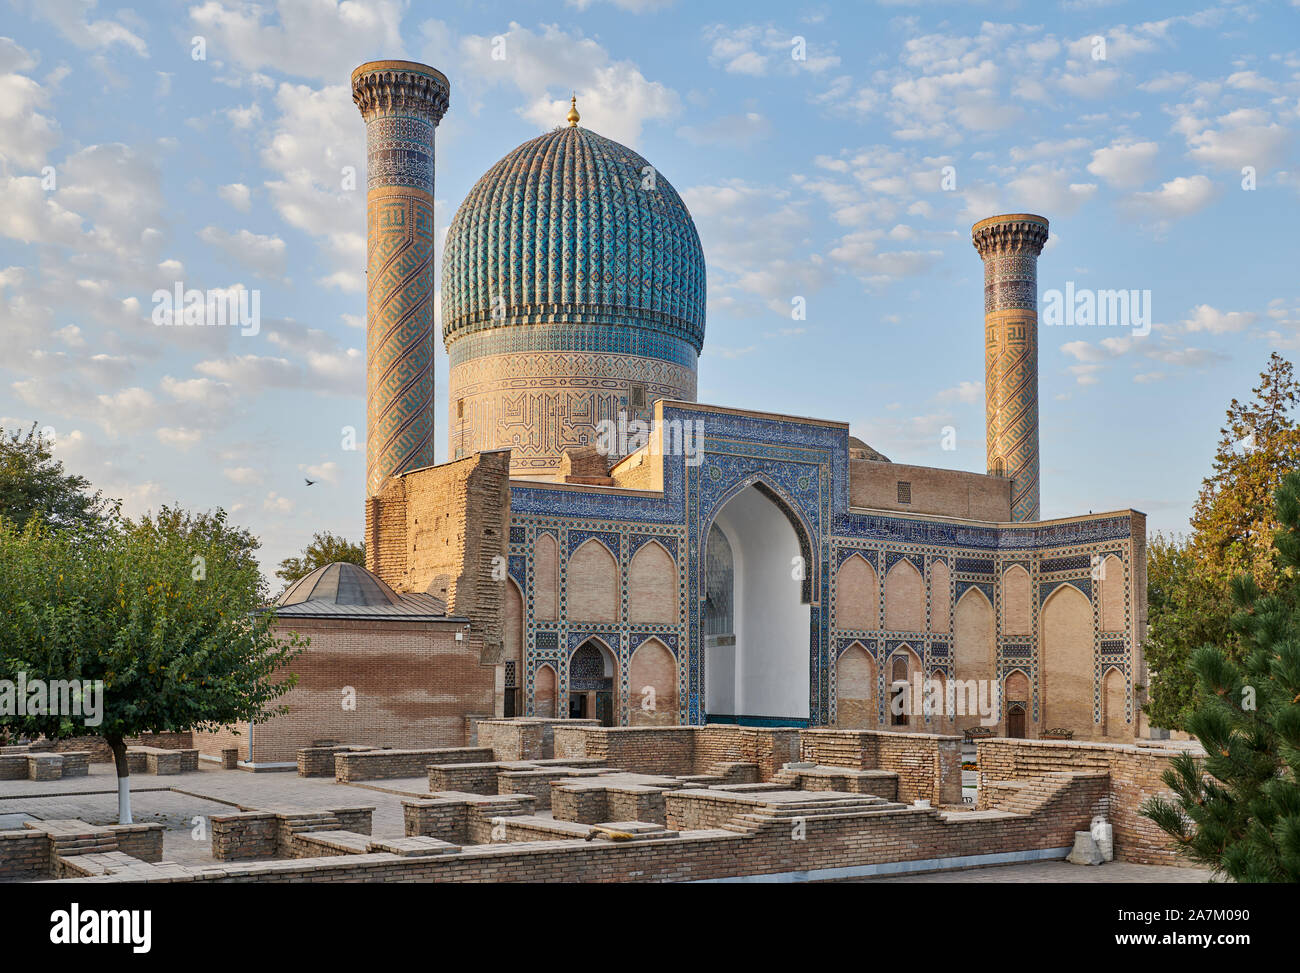 Amir-Timur-Mausoleum or Gur-Emir mausoleum of Tamerlane, Samarkand, Uzbekistan, Central Asia Stock Photo